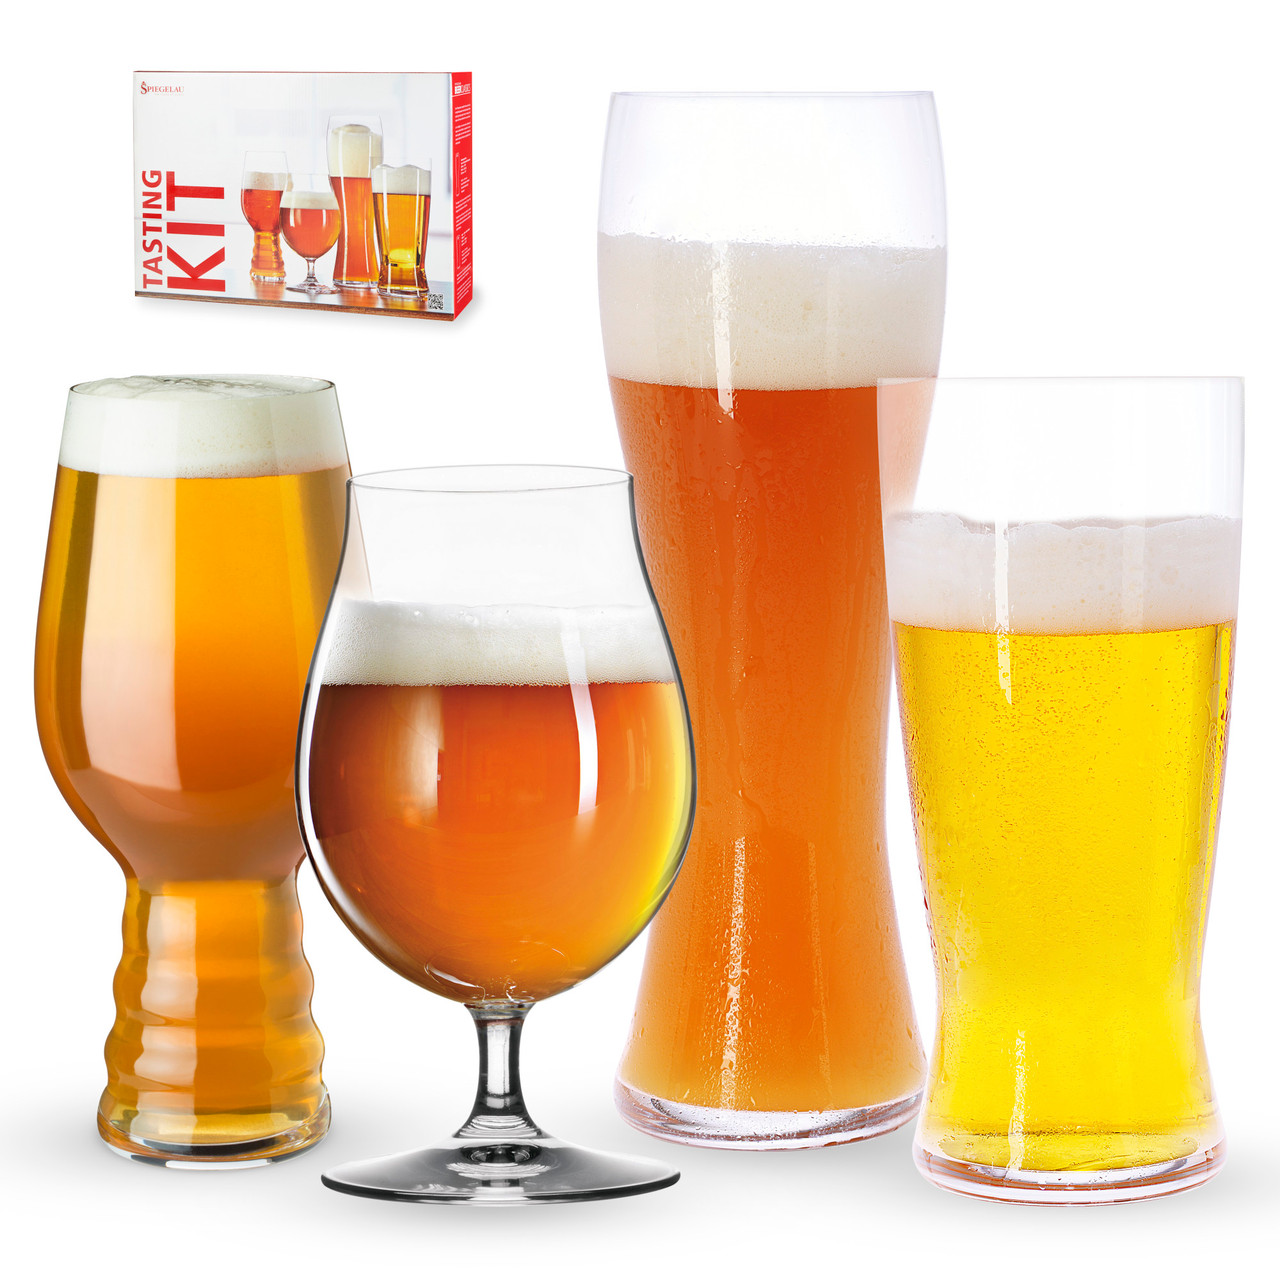 https://cdn11.bigcommerce.com/s-oo0gdojvjo/images/stencil/1280x1280/products/68529/100672/spiegelau-classic-beer-glasses-tasting-kit-set-of-4__65583.1683777501.jpg?c=2&imbypass=on